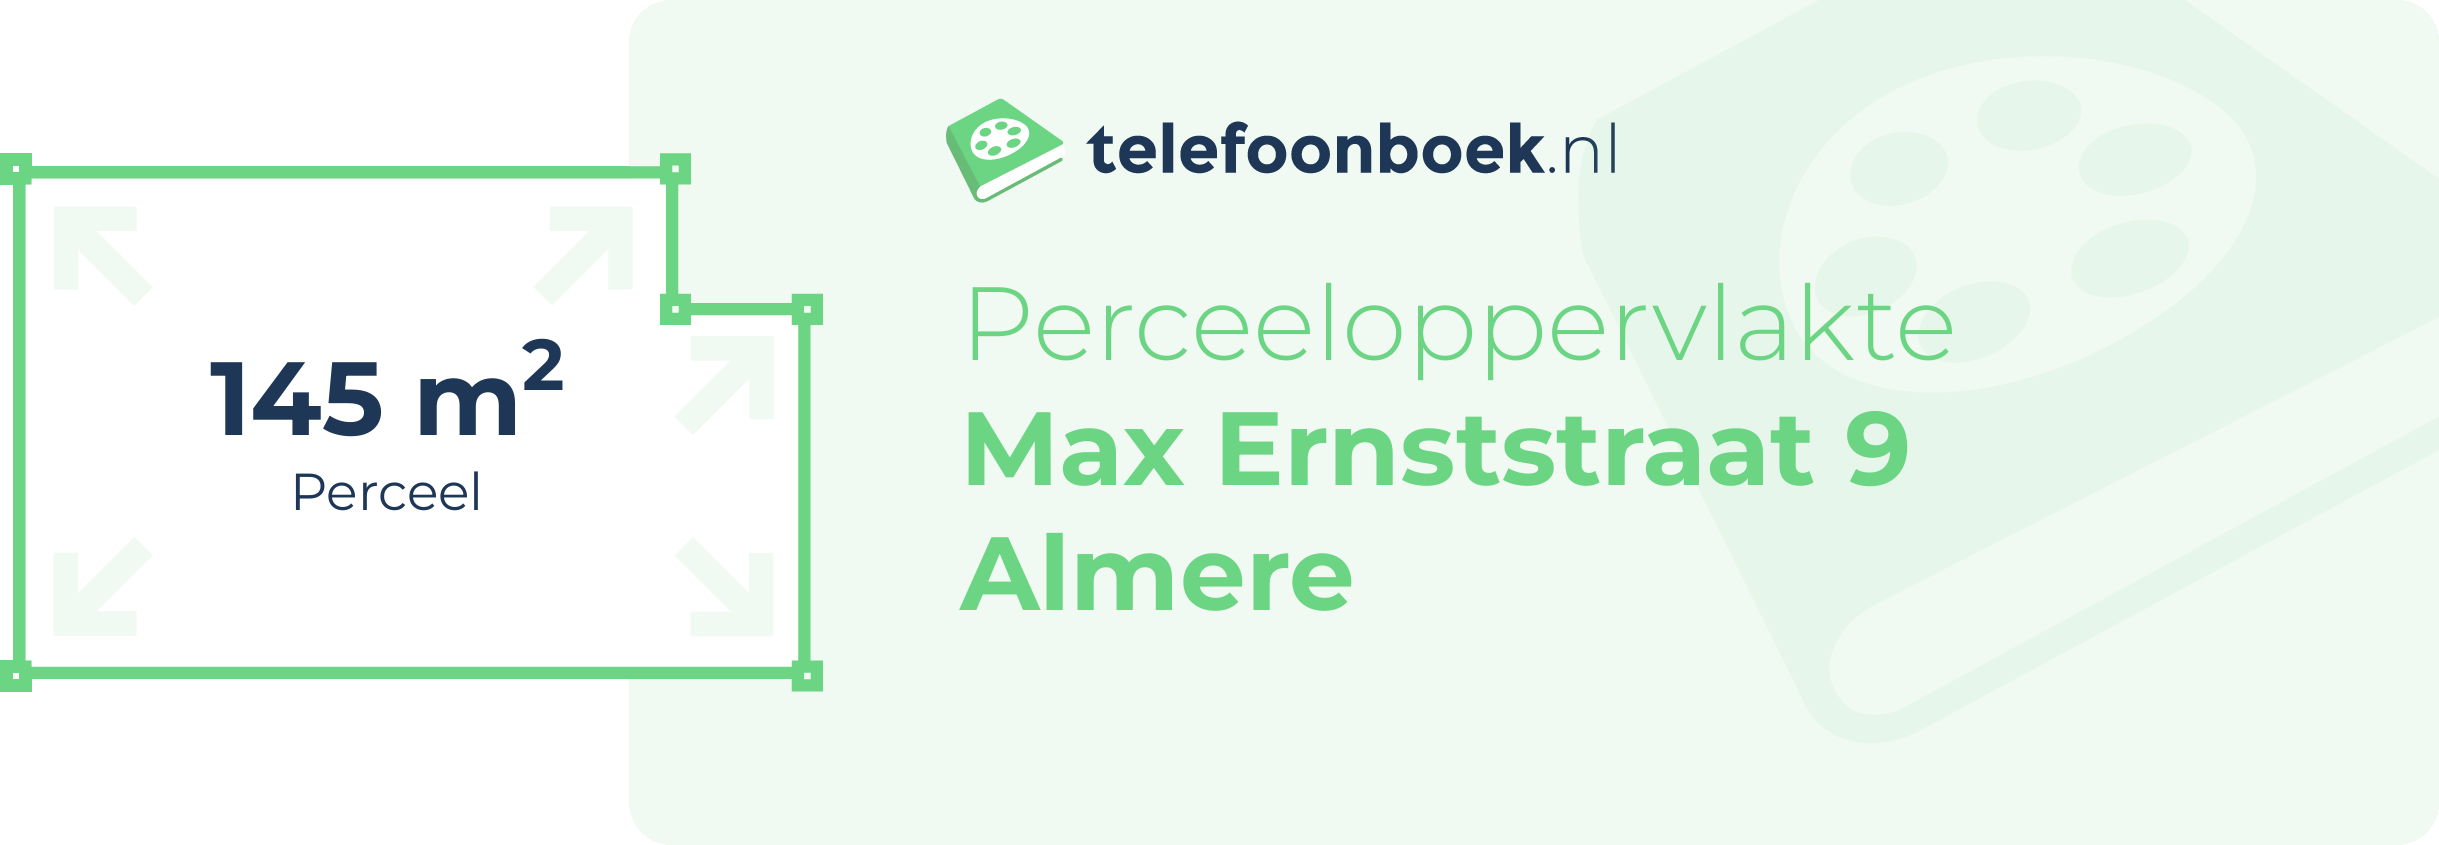 Perceeloppervlakte Max Ernststraat 9 Almere